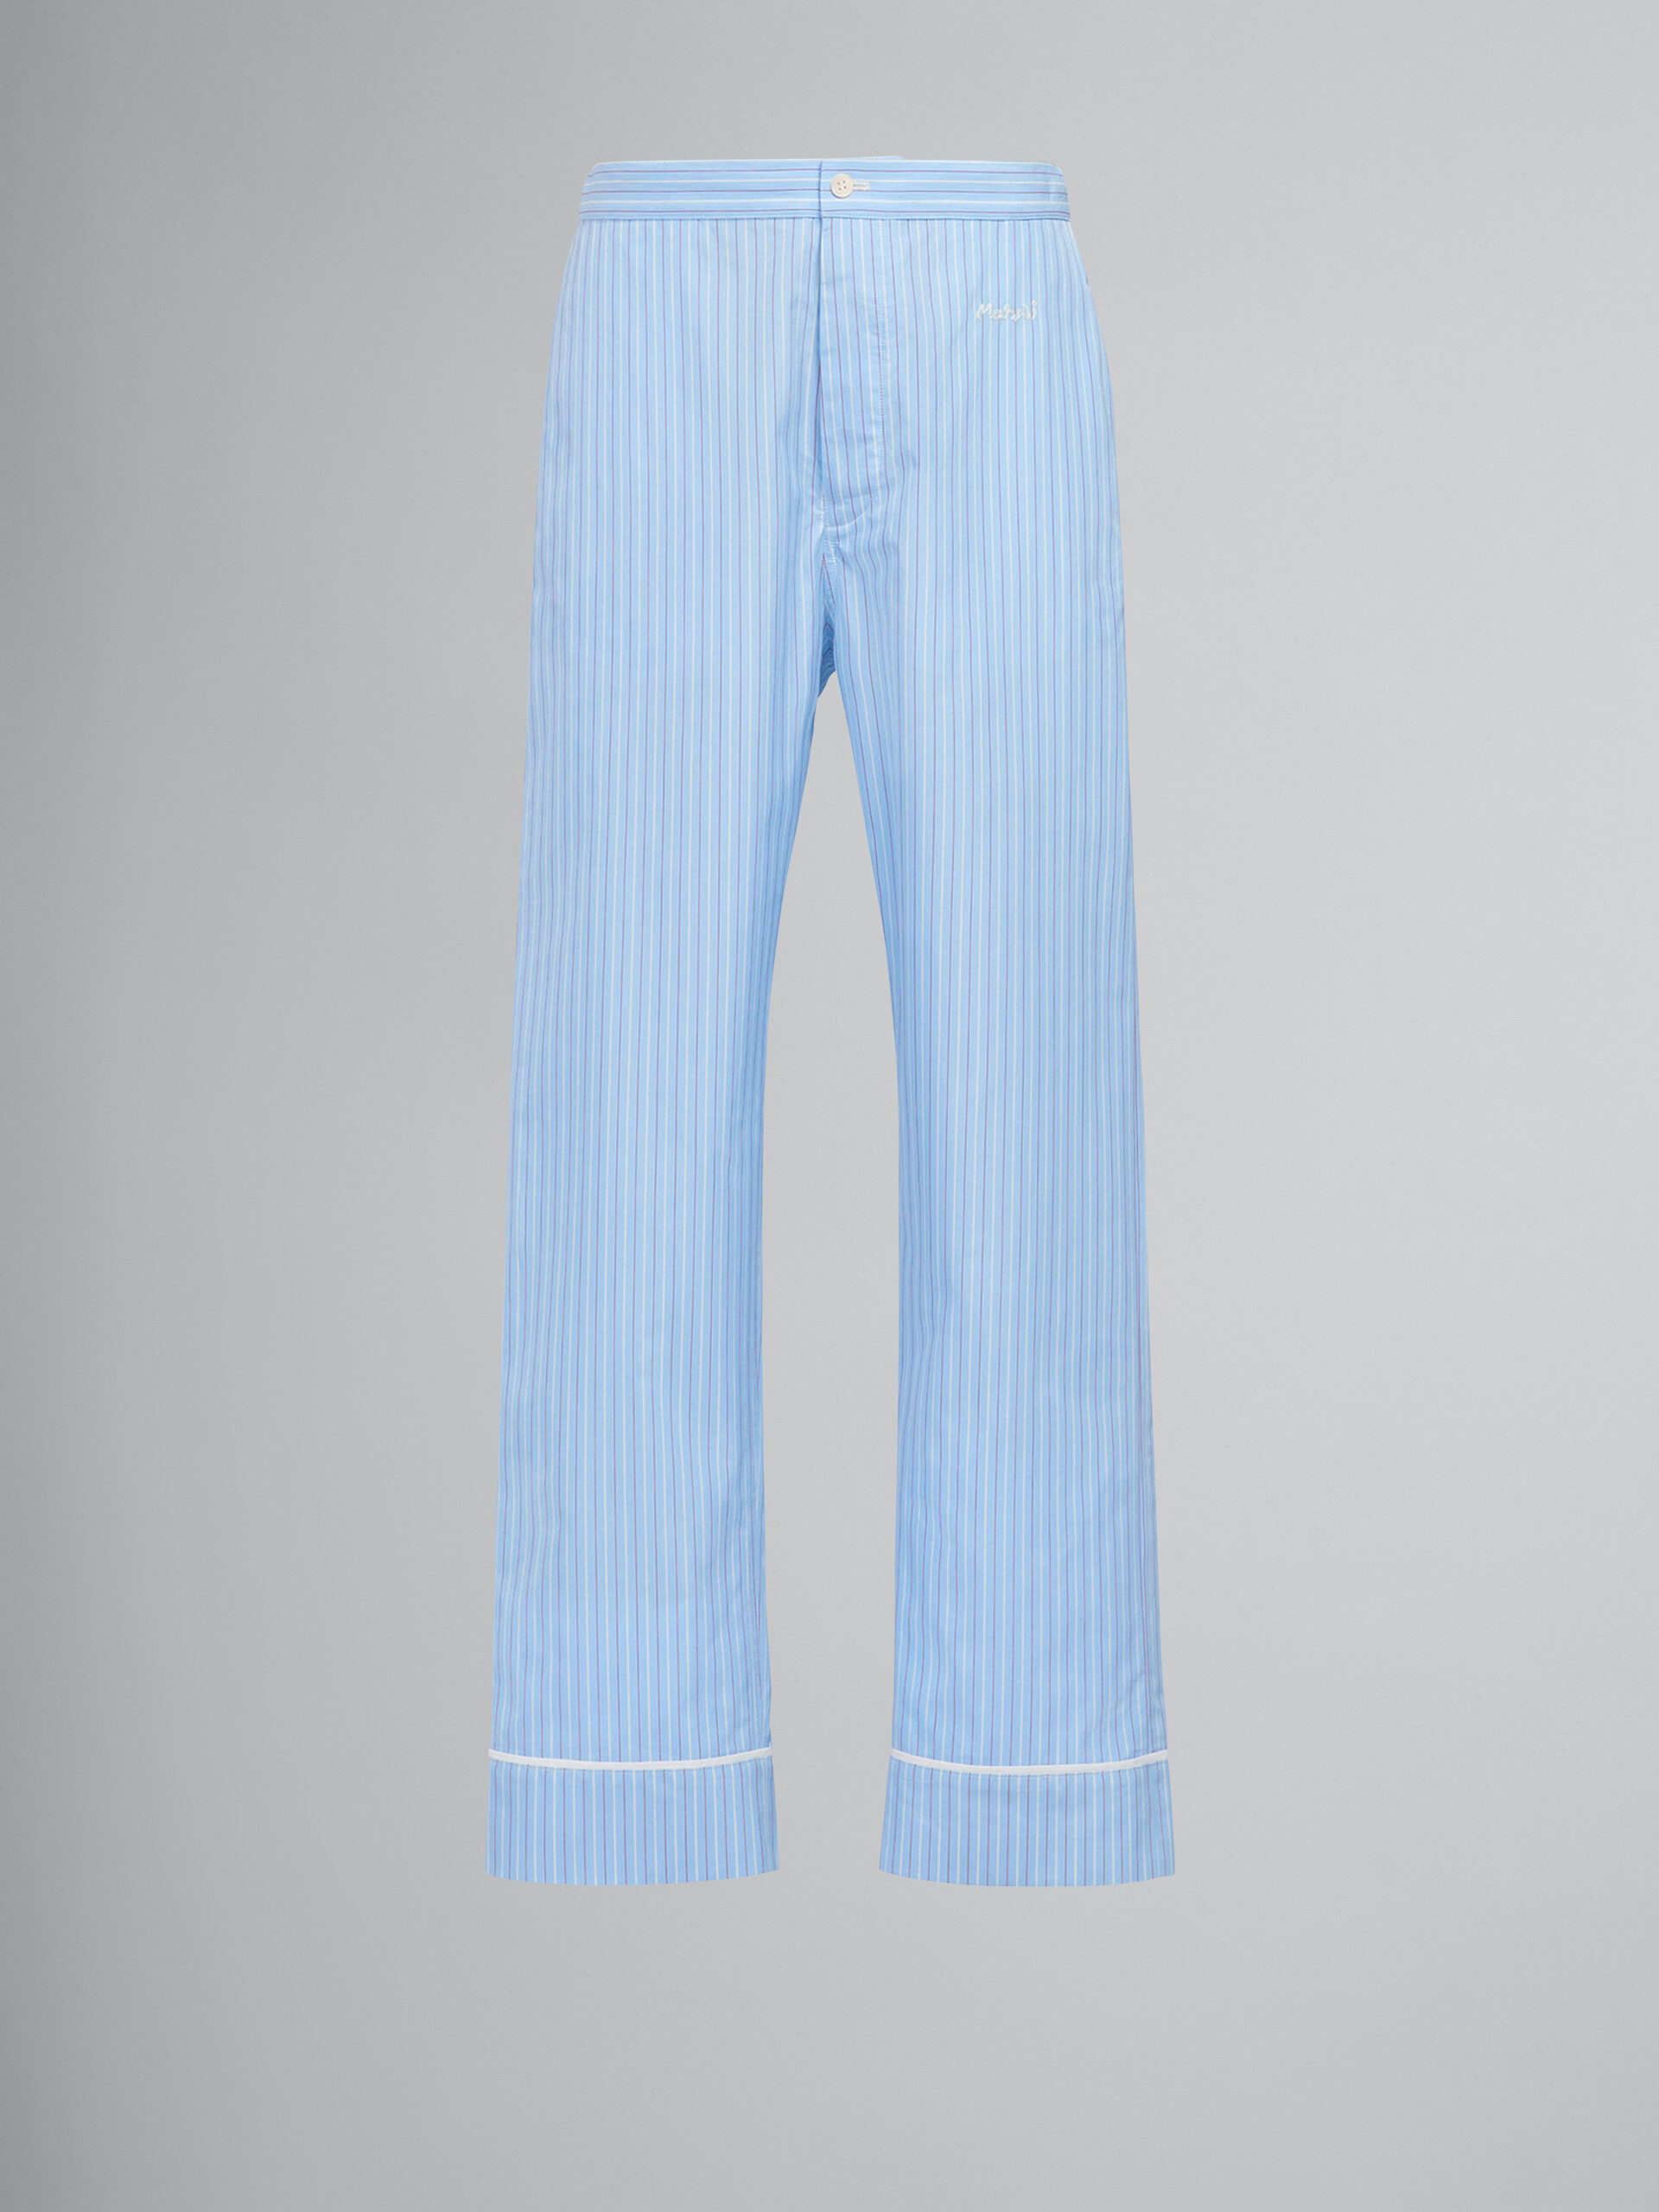 Sky blue striped poplin pants - Pants - Image 1